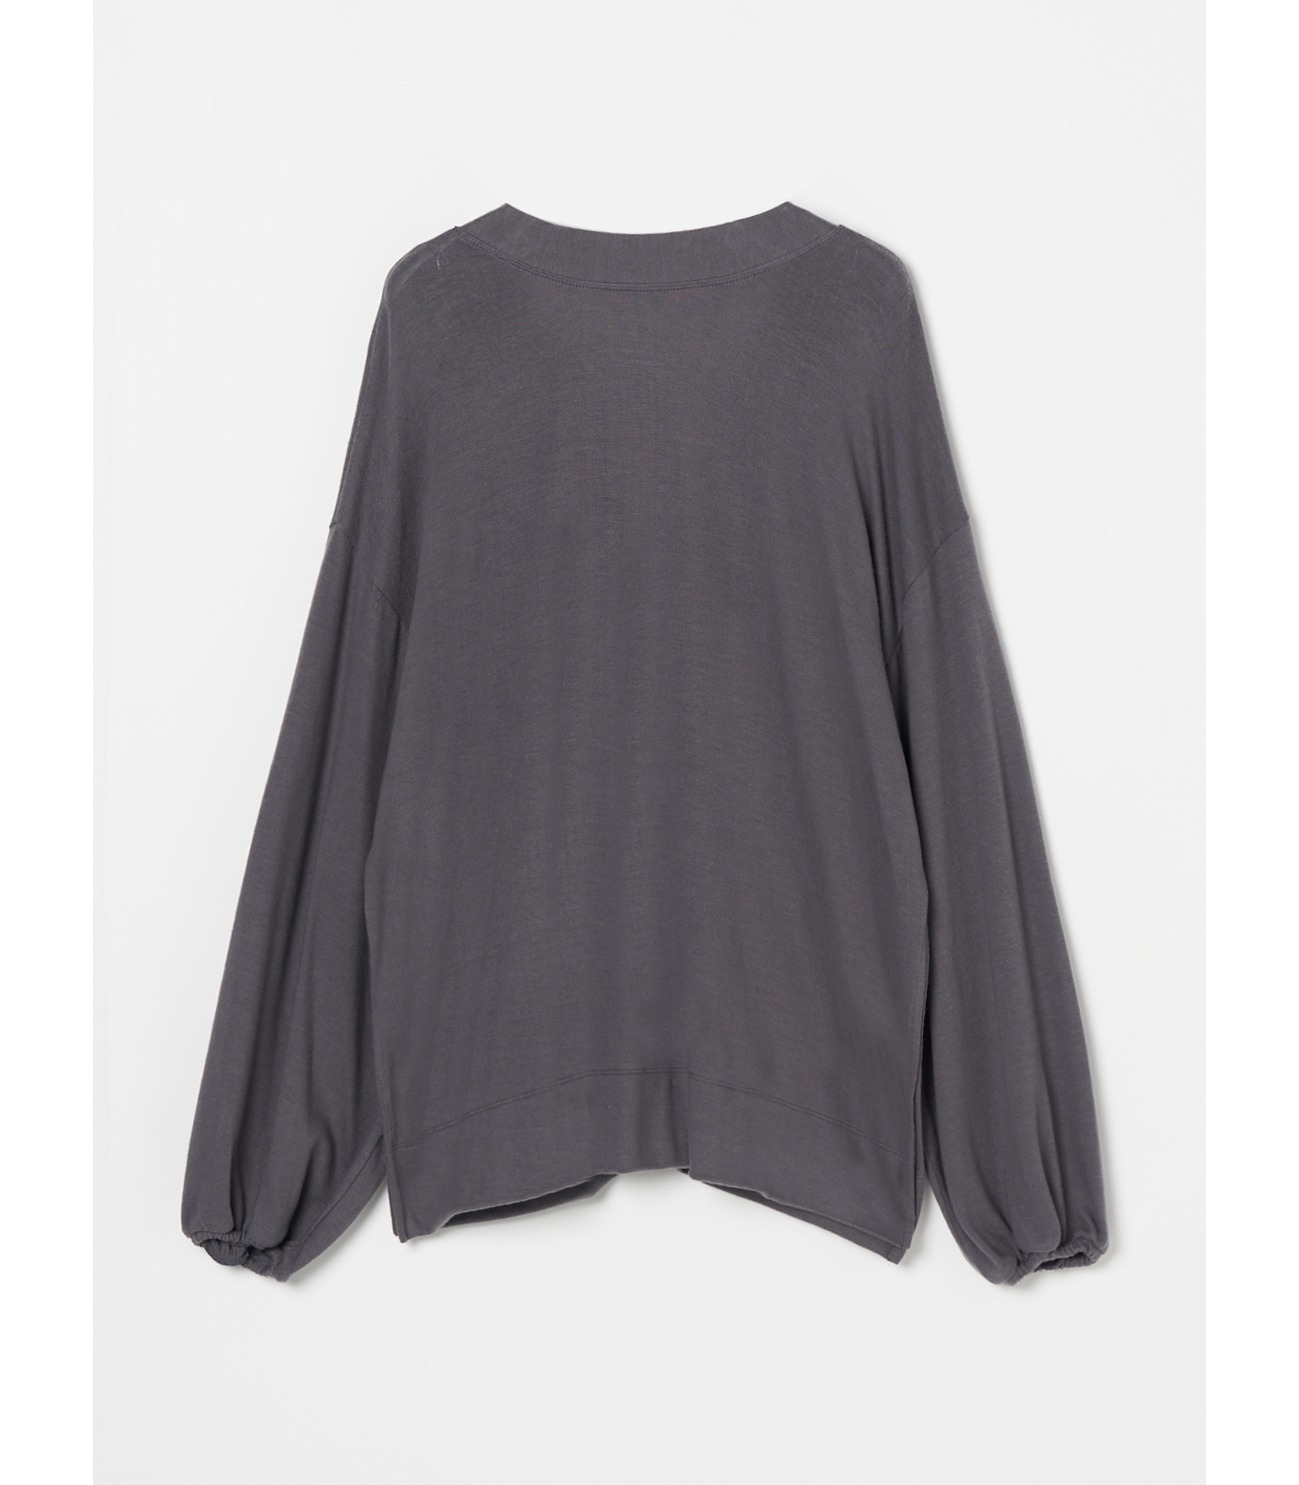 【Naoko Okusa x three dots】Brushed sweater volume sleeve 2way cardy 詳細画像 shark grey 1